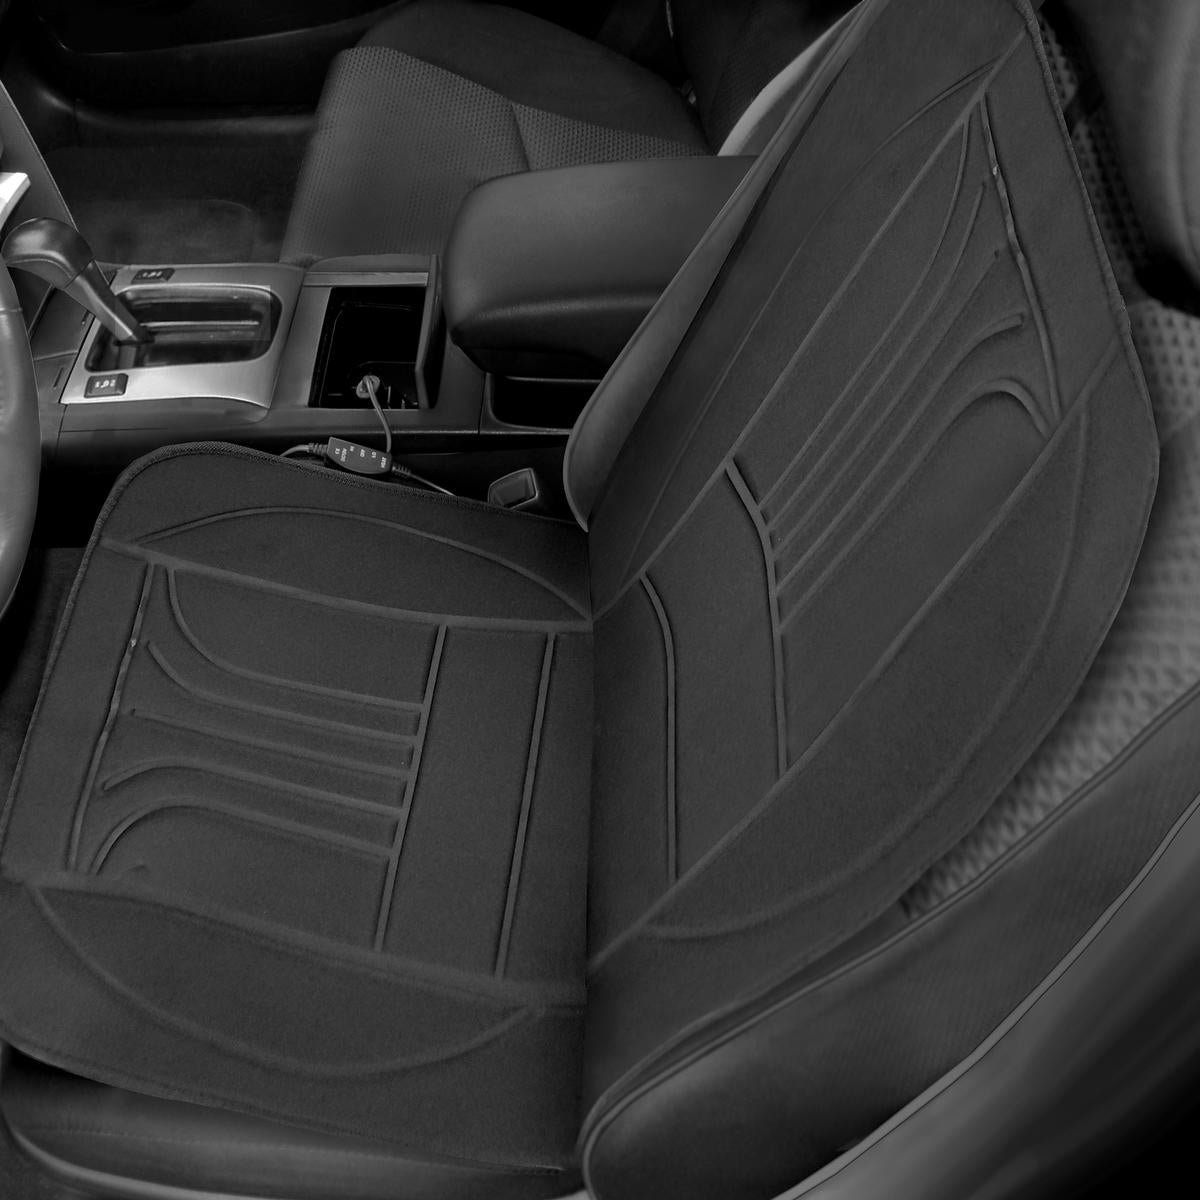 ActionHeat 12V Luxury Heated Car Seat Cushion - Battery